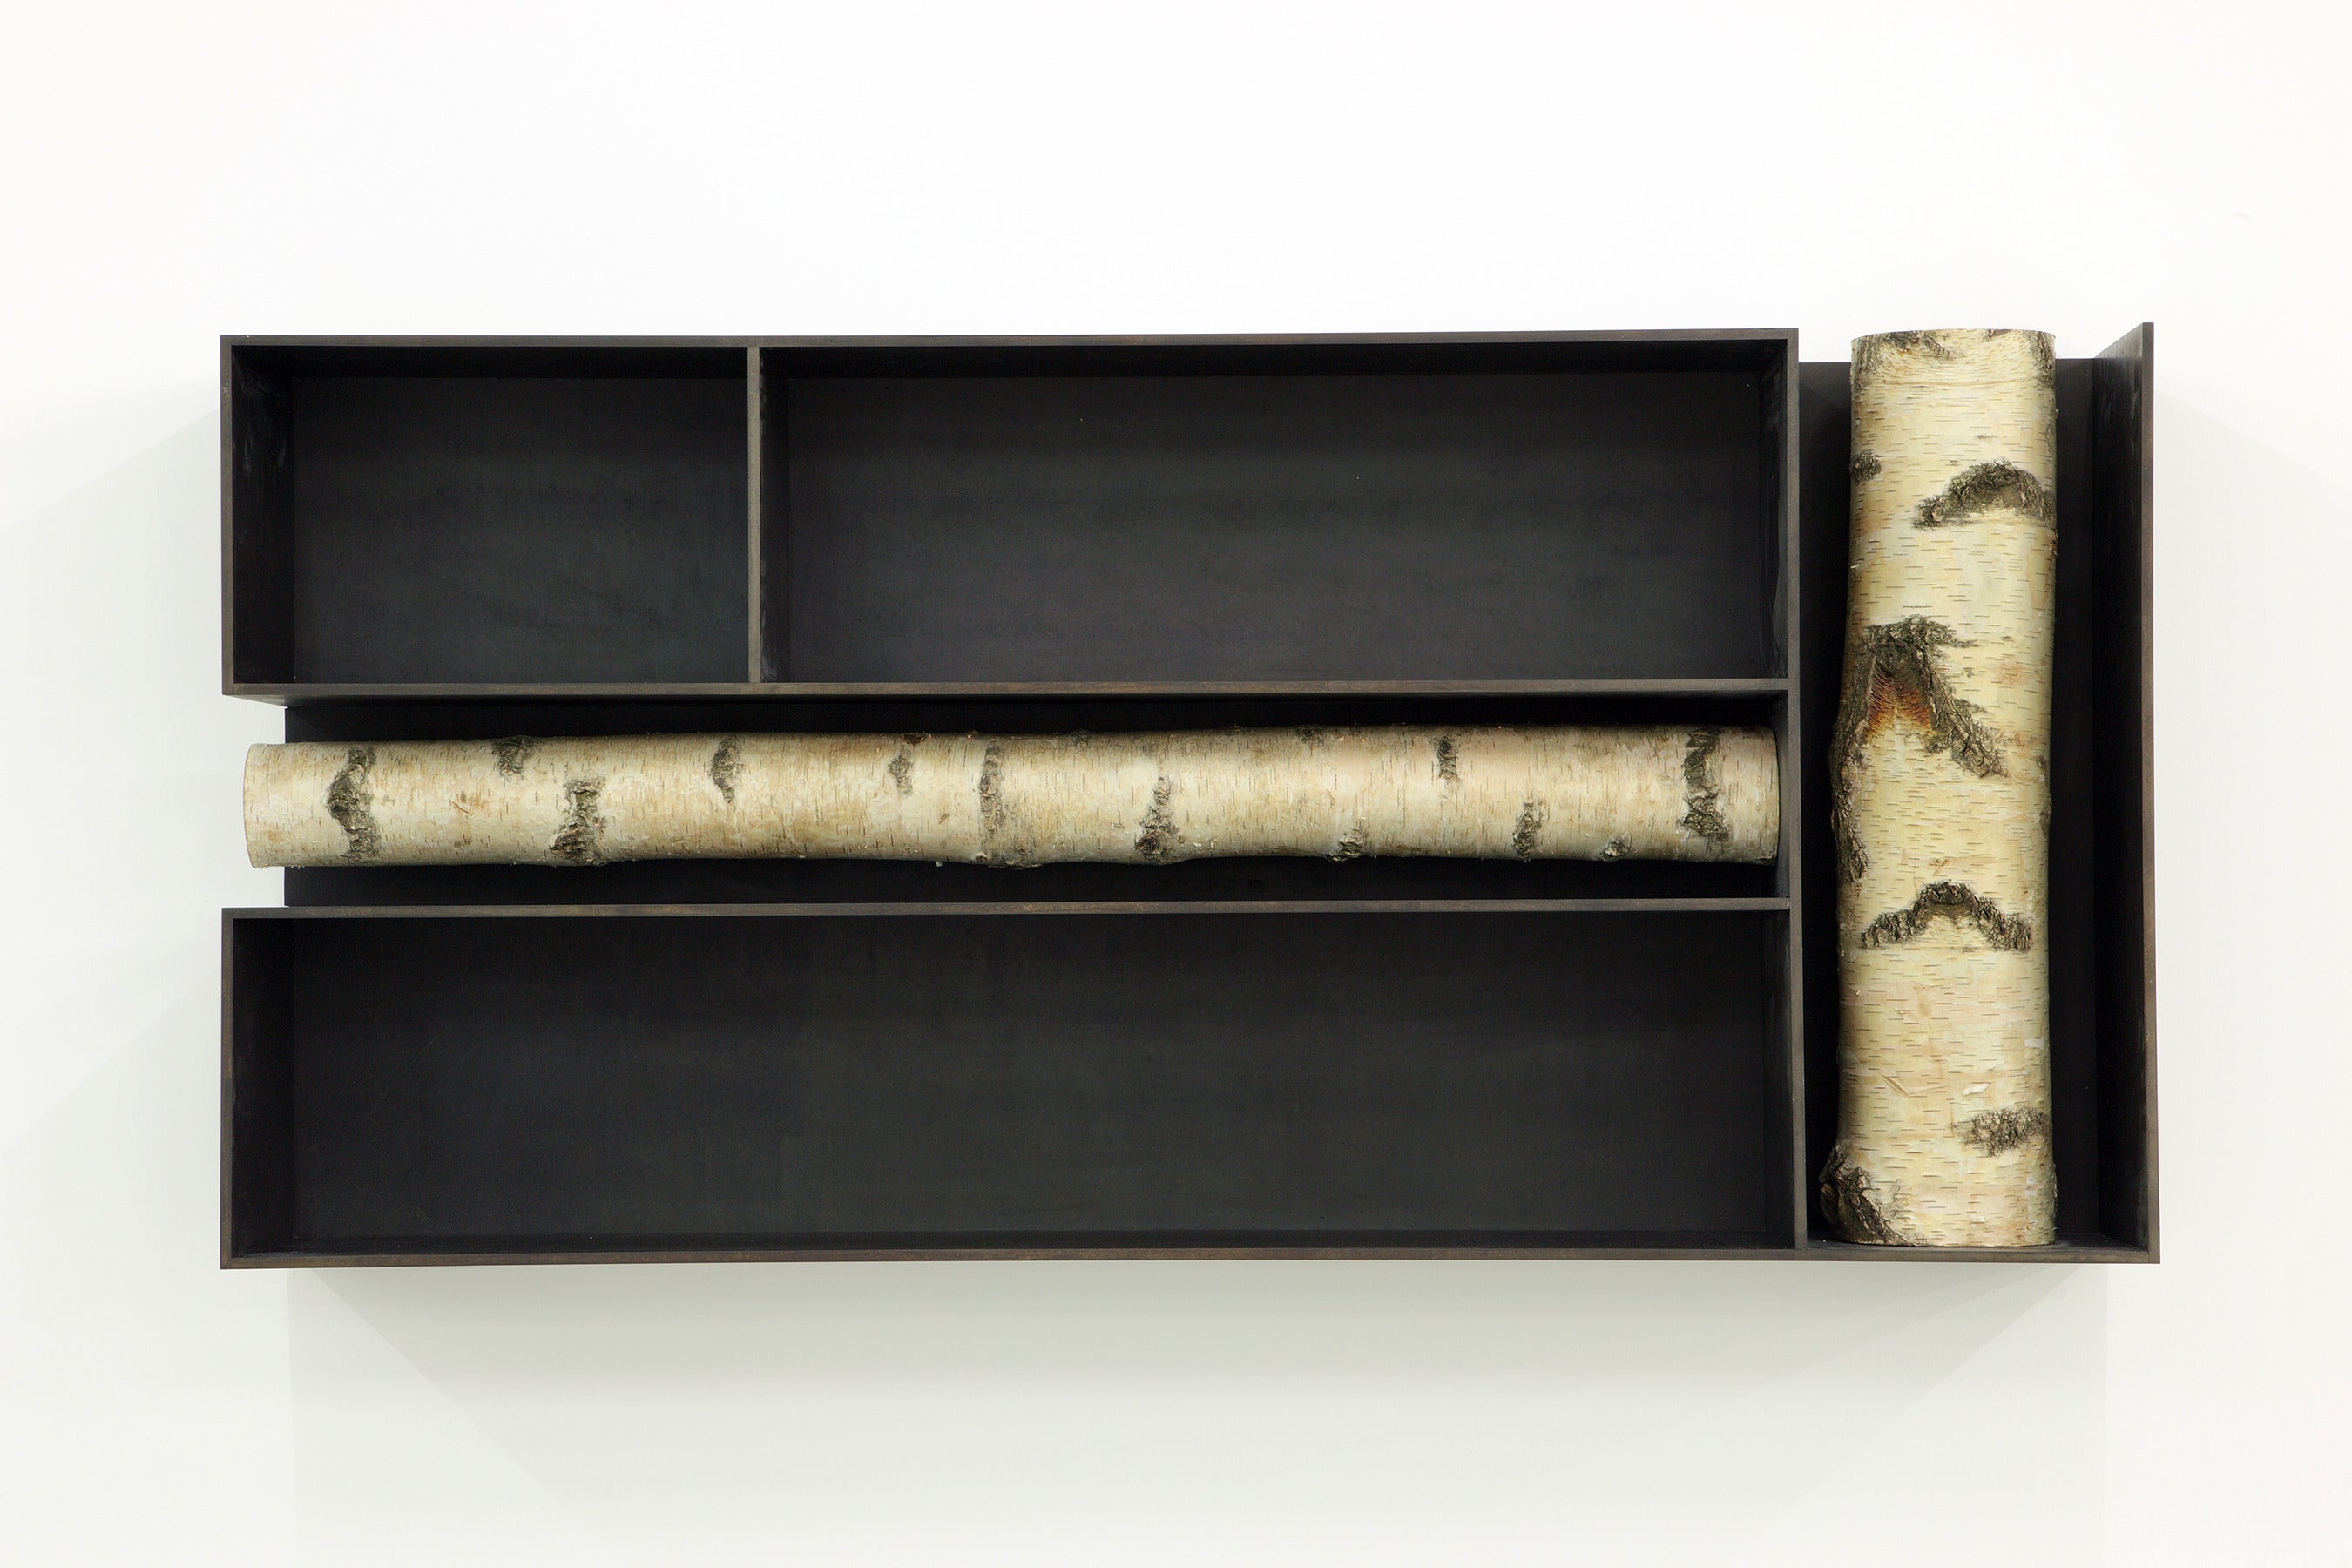 Andrea Branzi, Tree 3, Cabinet, Bookshelf, Birch Wood, Patinated Aluminum, 2010